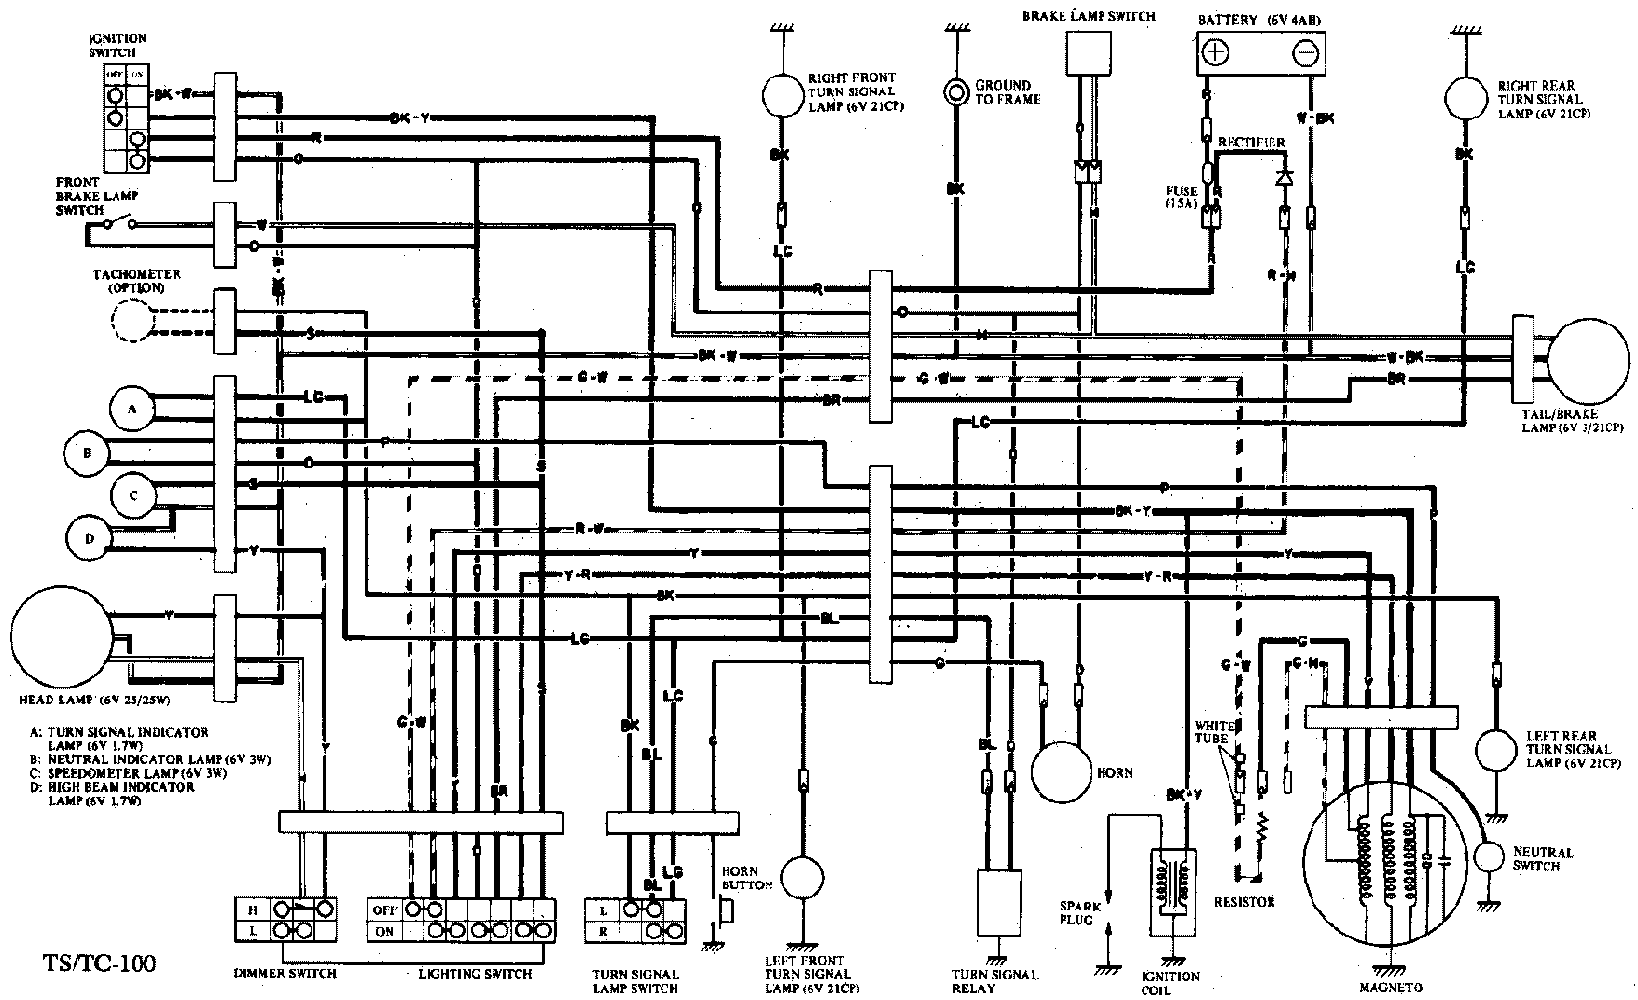 1985 suzuki fa50 wiring diagram